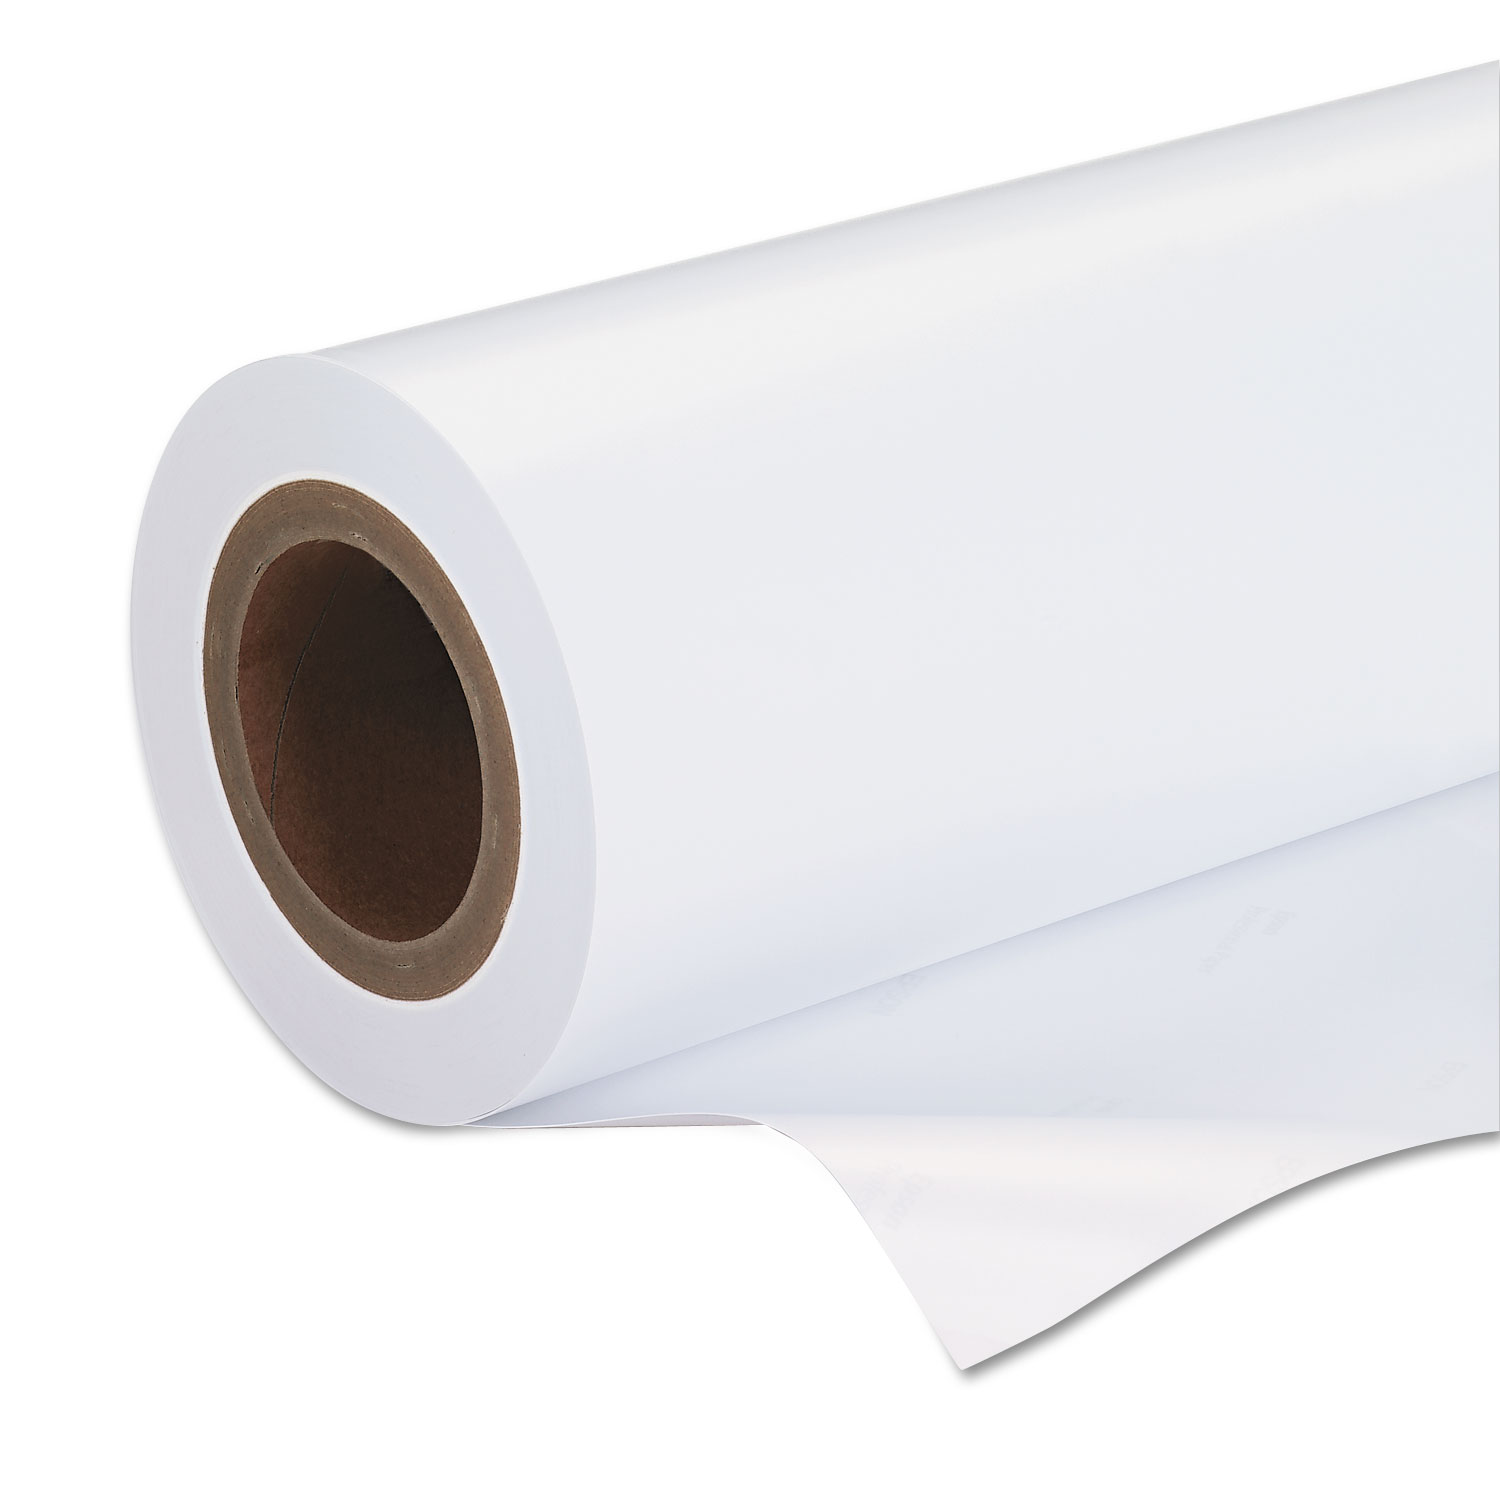  Epson S042083 Premium Luster Photo Paper Roll, 3 Core, 44 x 100 ft, Premium Luster White (EPSS042083) 